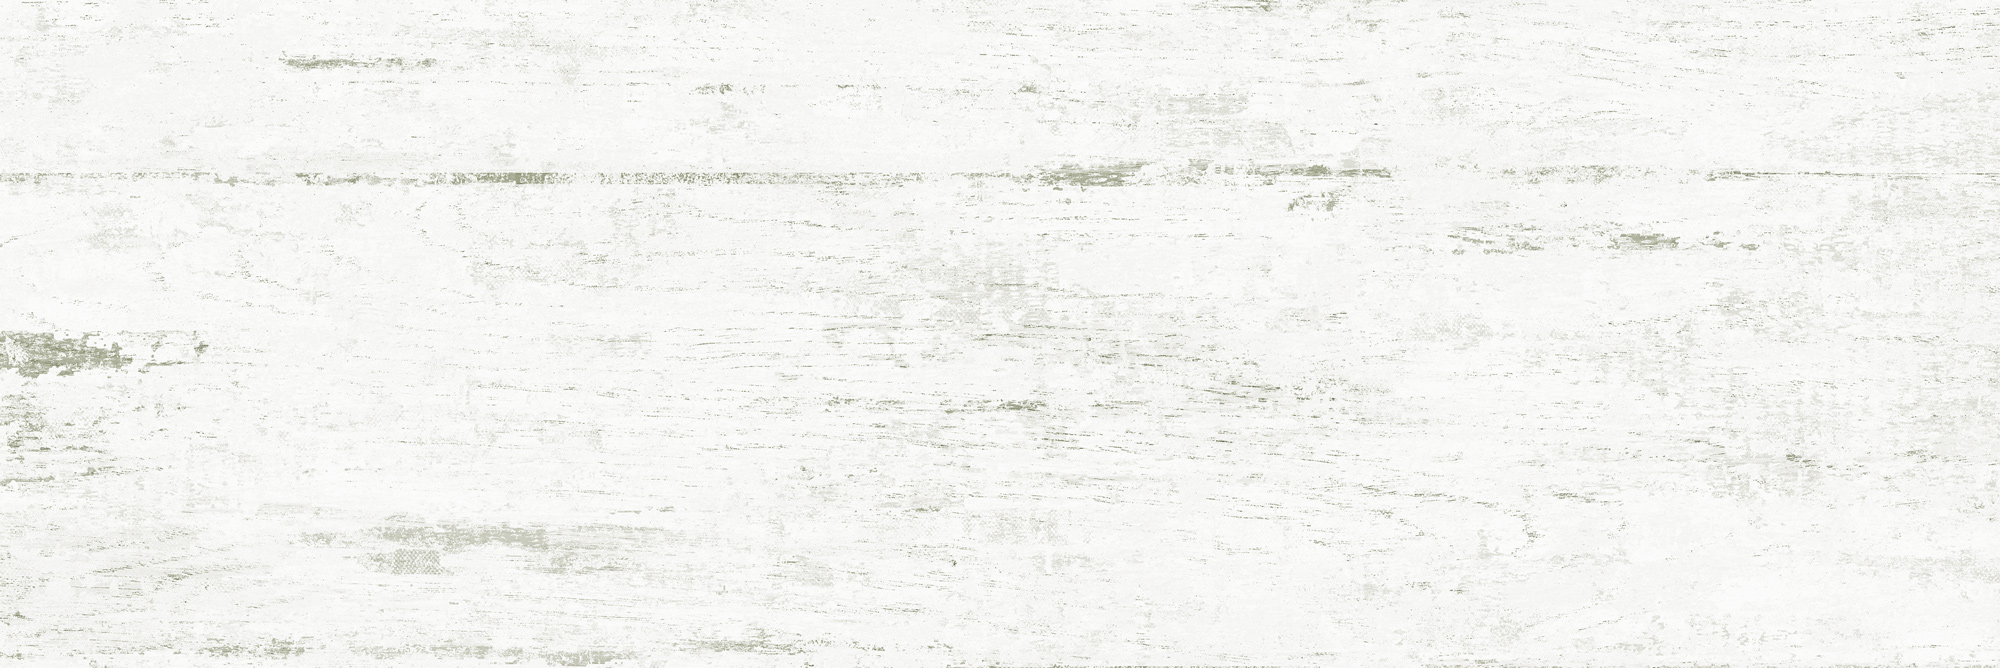 Настенная плитка AltaCera Formwork White WT11FOR00 20x60 плитка настенная altacera paradise white 25x50 см